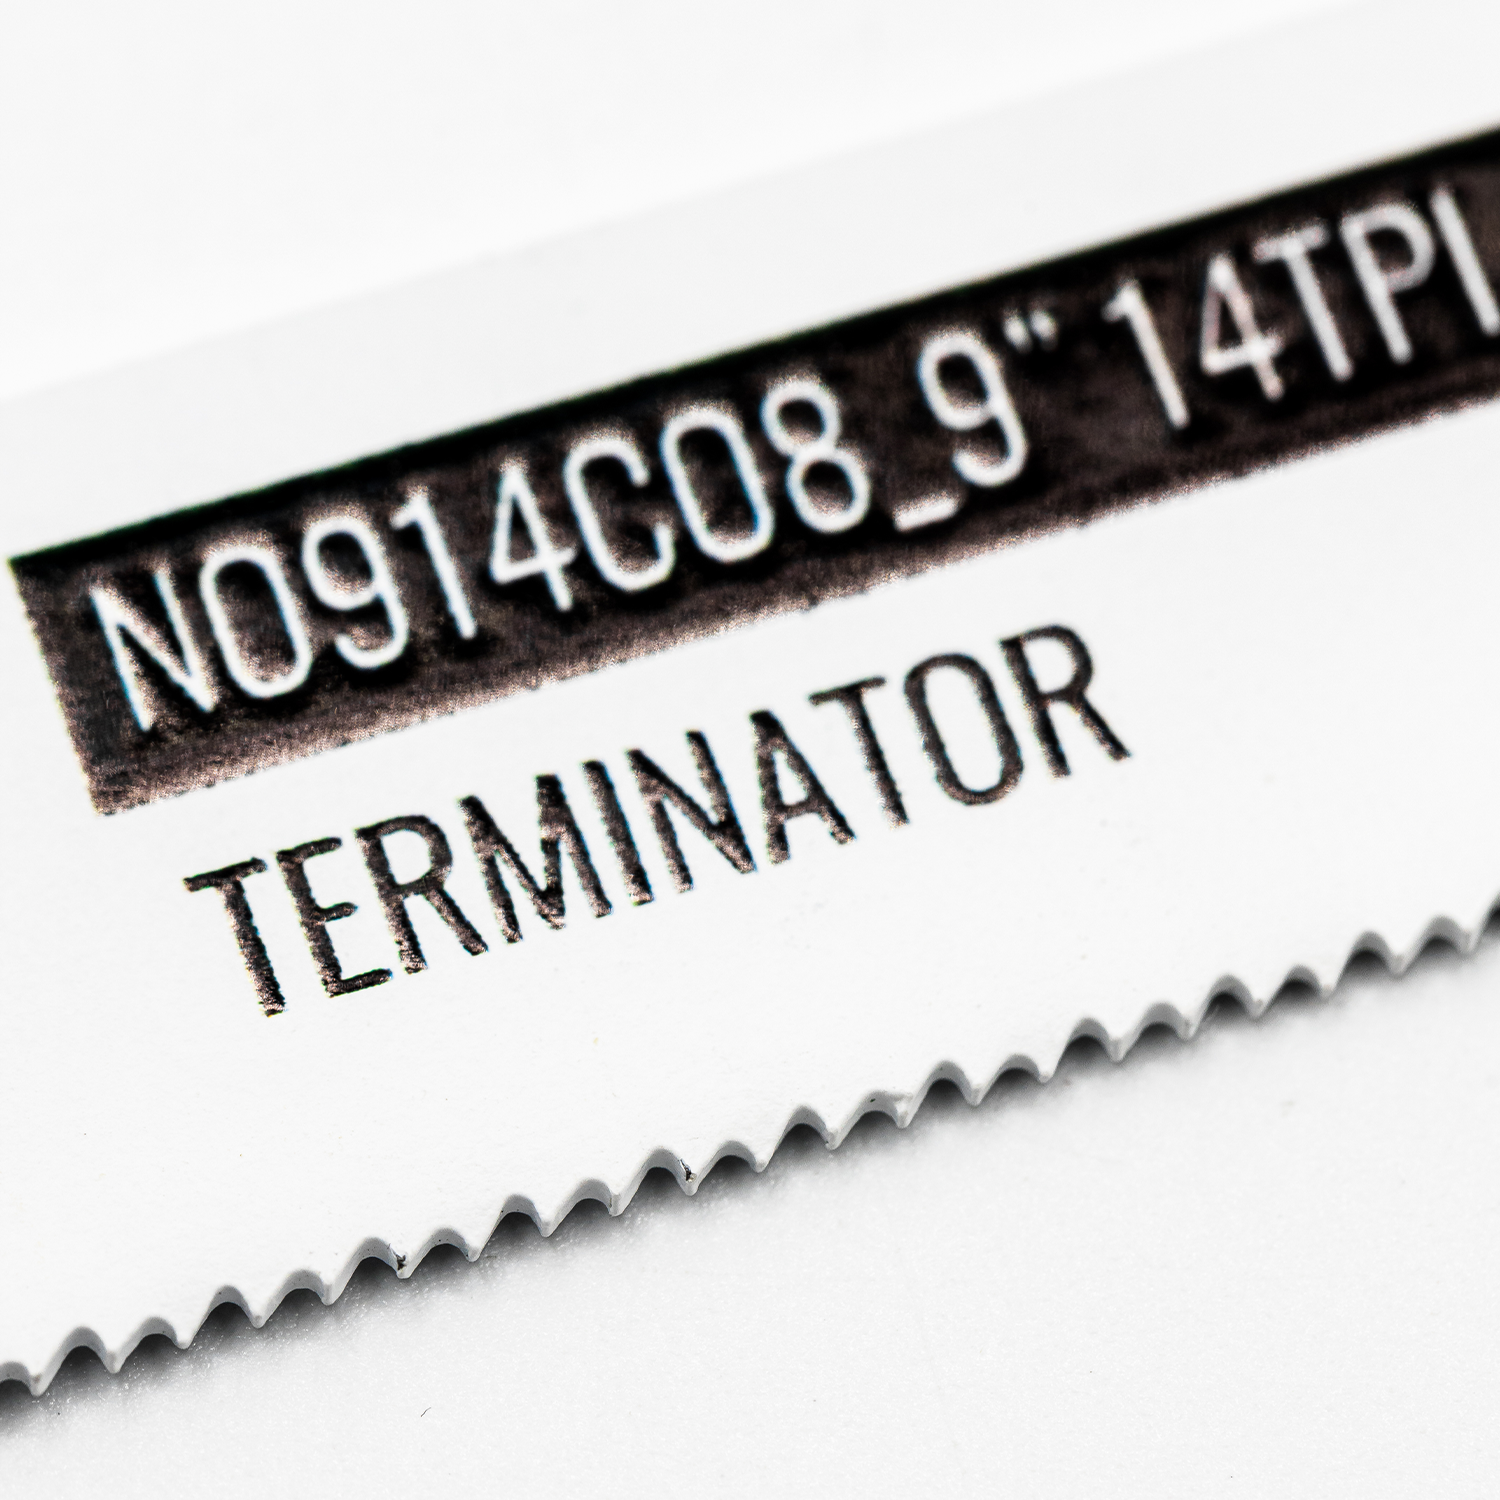 Hoja de sierra sable Terminator para metal 225mm